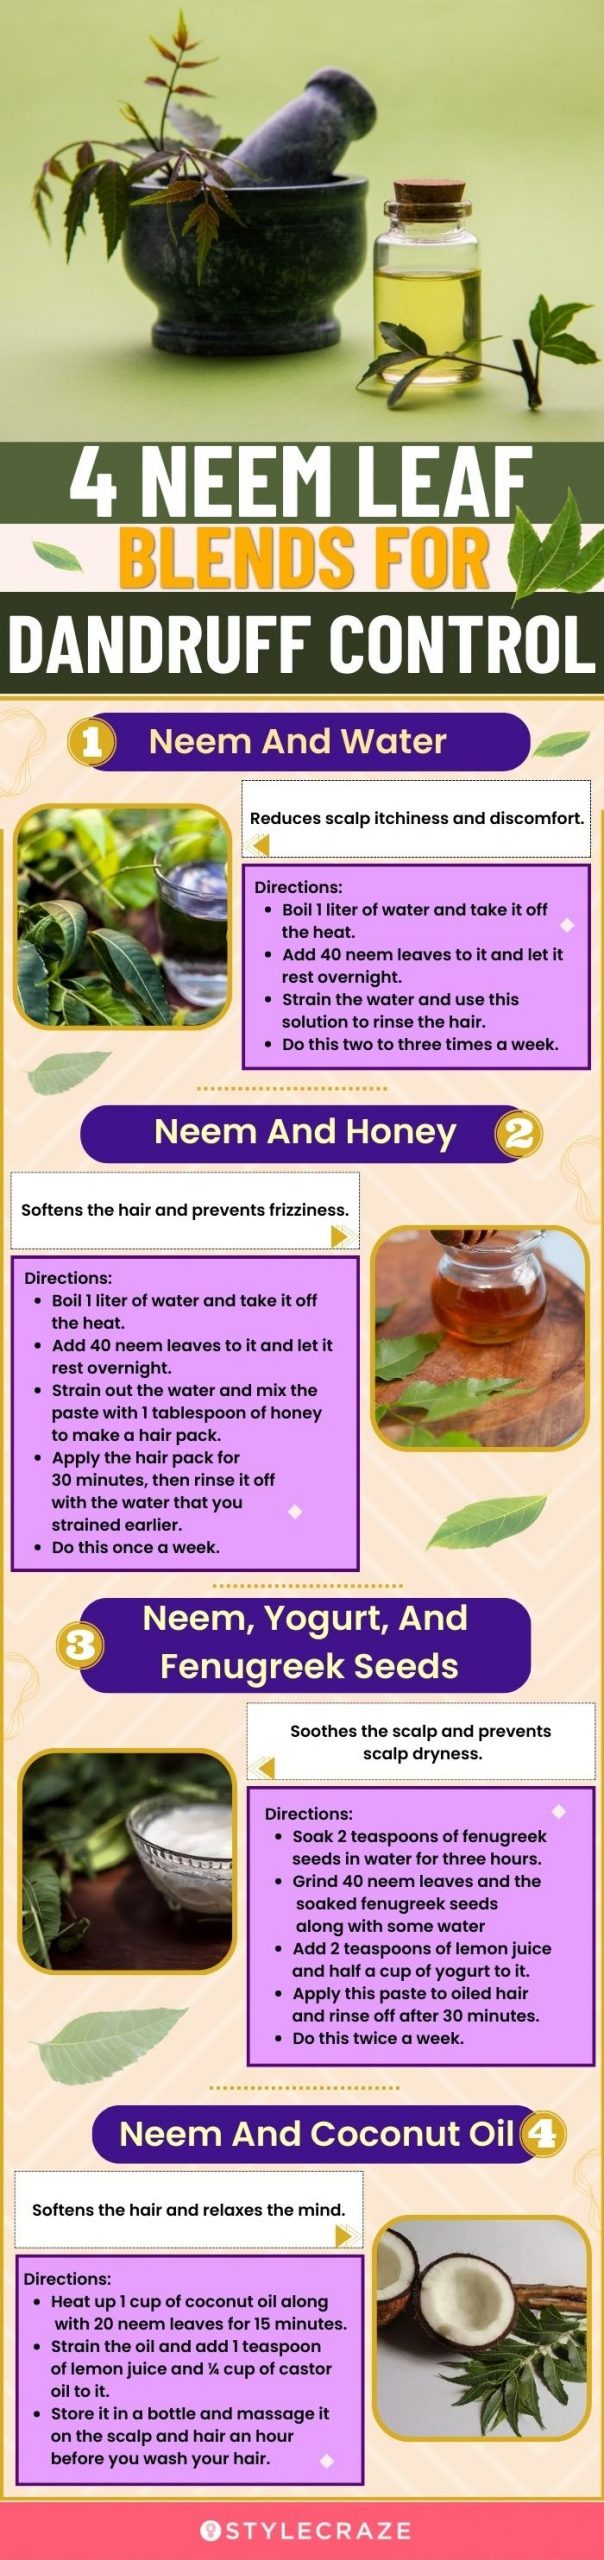 4 neem leaf blends for dandruff control (infographic)